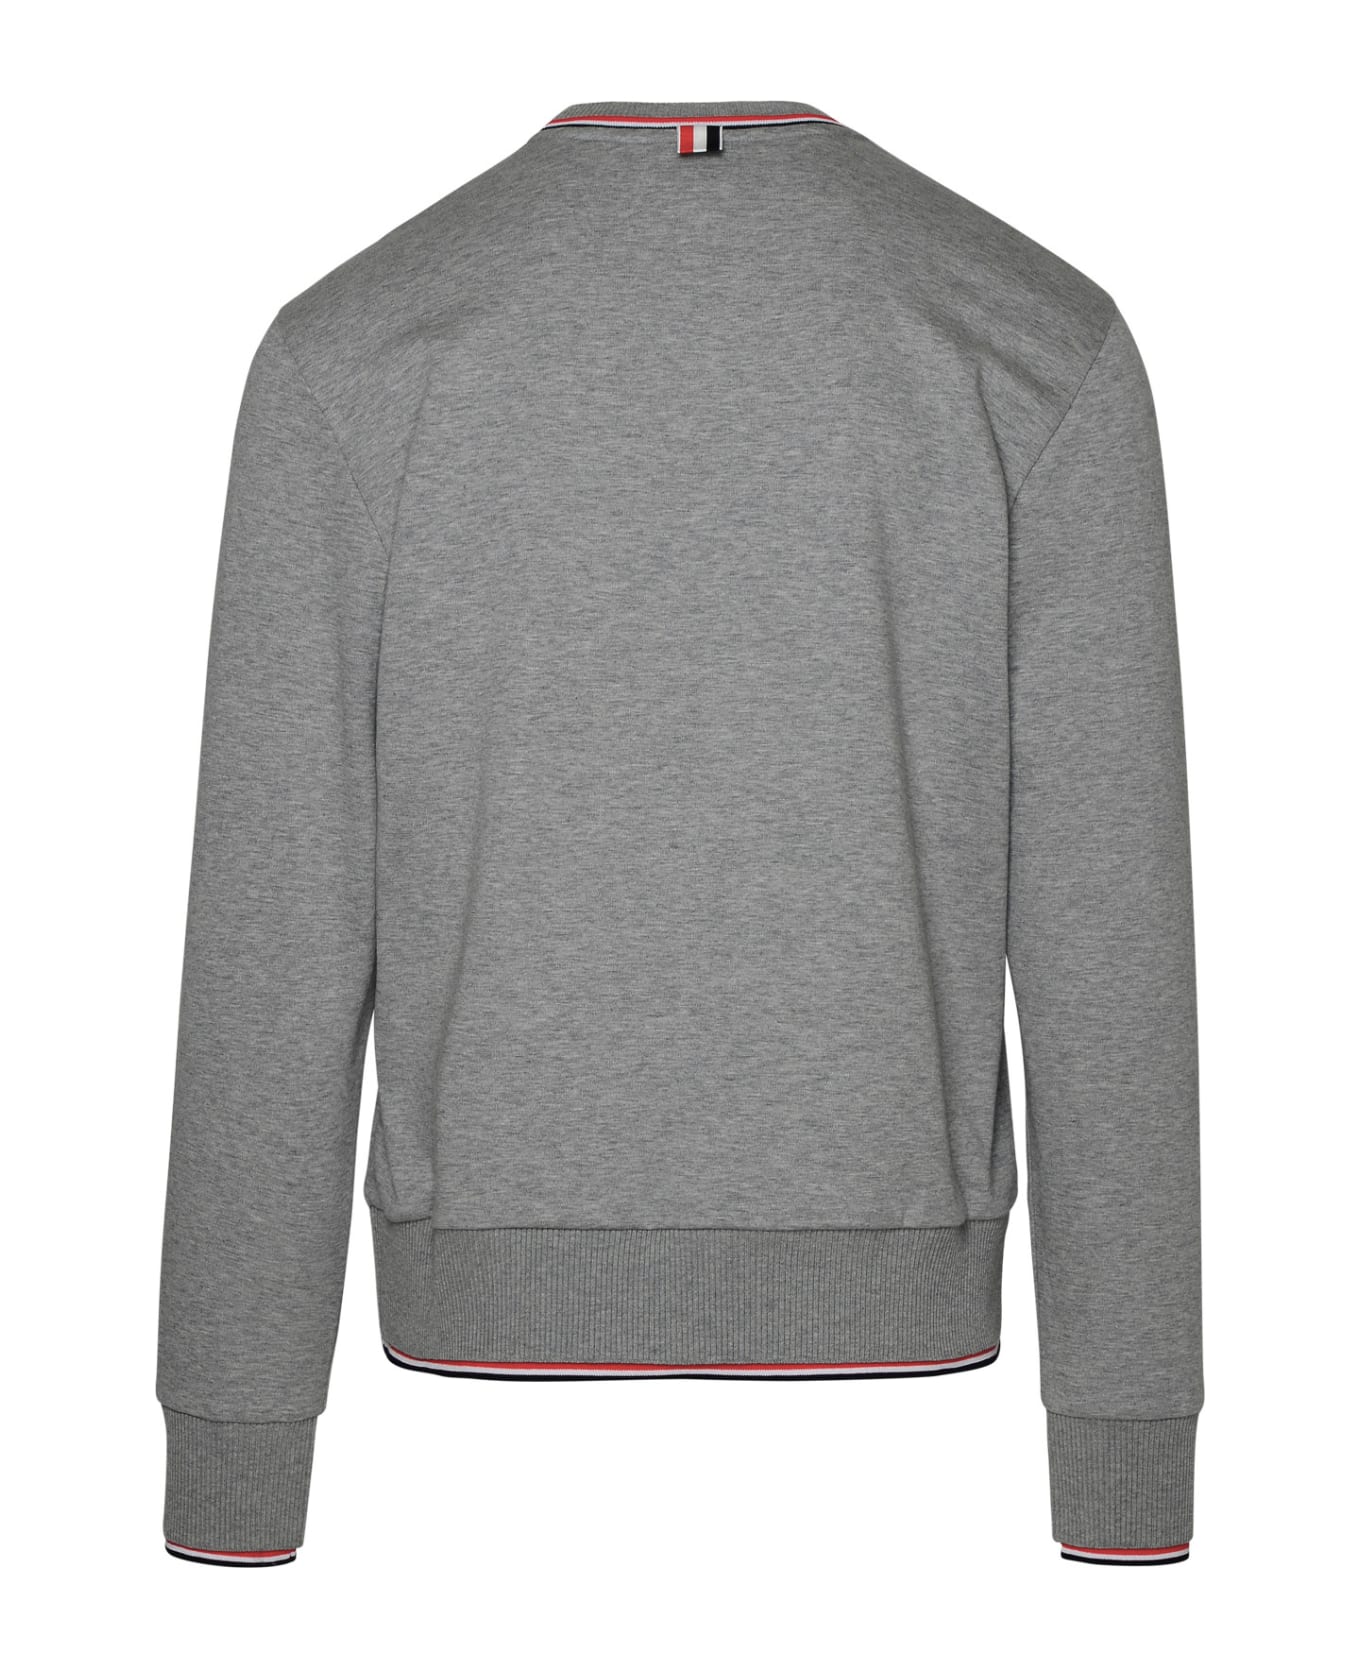 Thom Browne Gray Cotton Sweatshirt - GREY